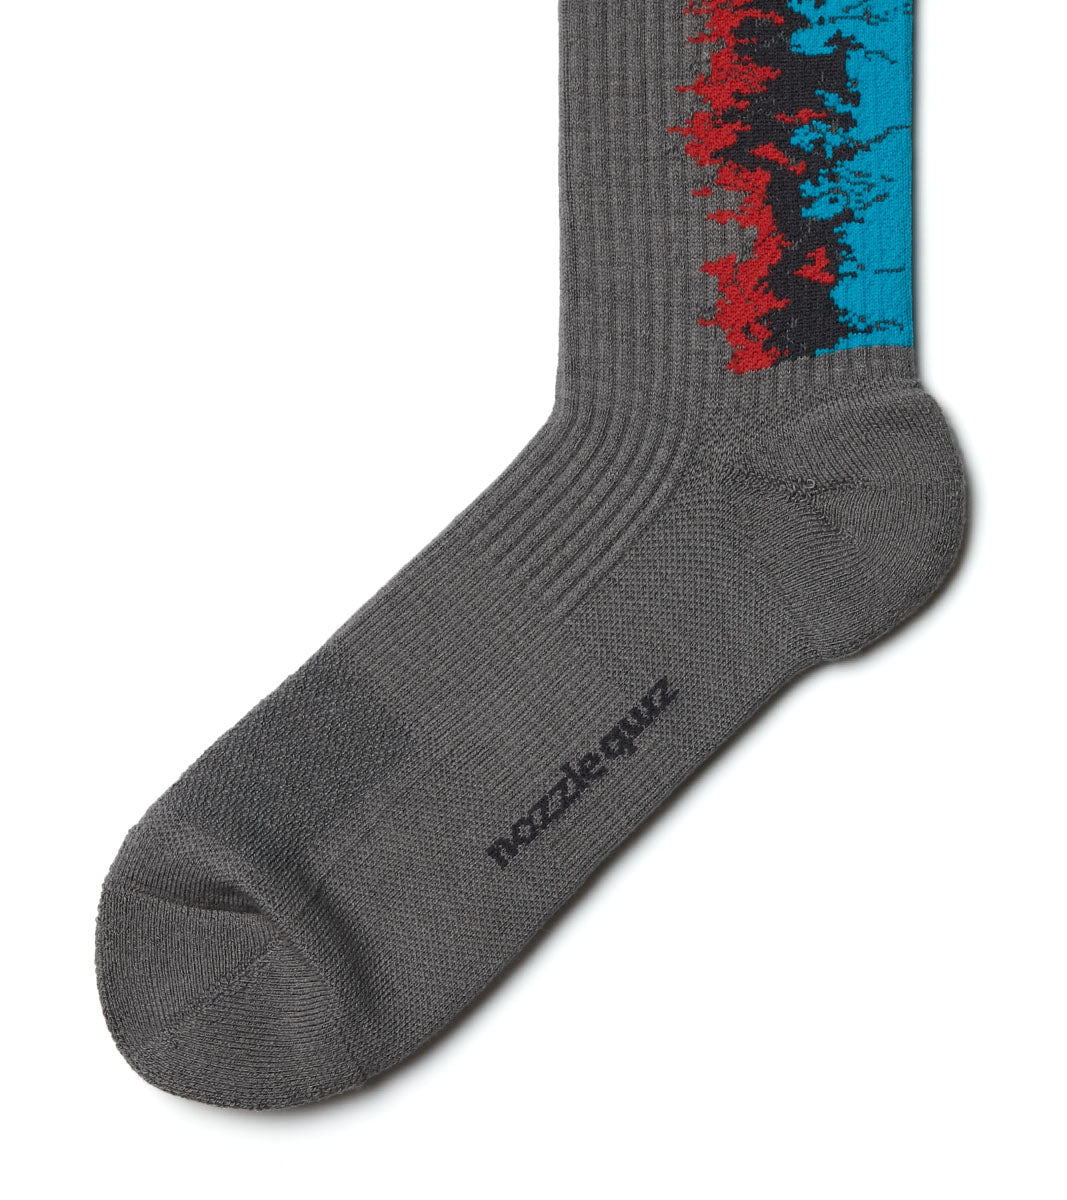 LANDING Midcalf socks - Gradient Red